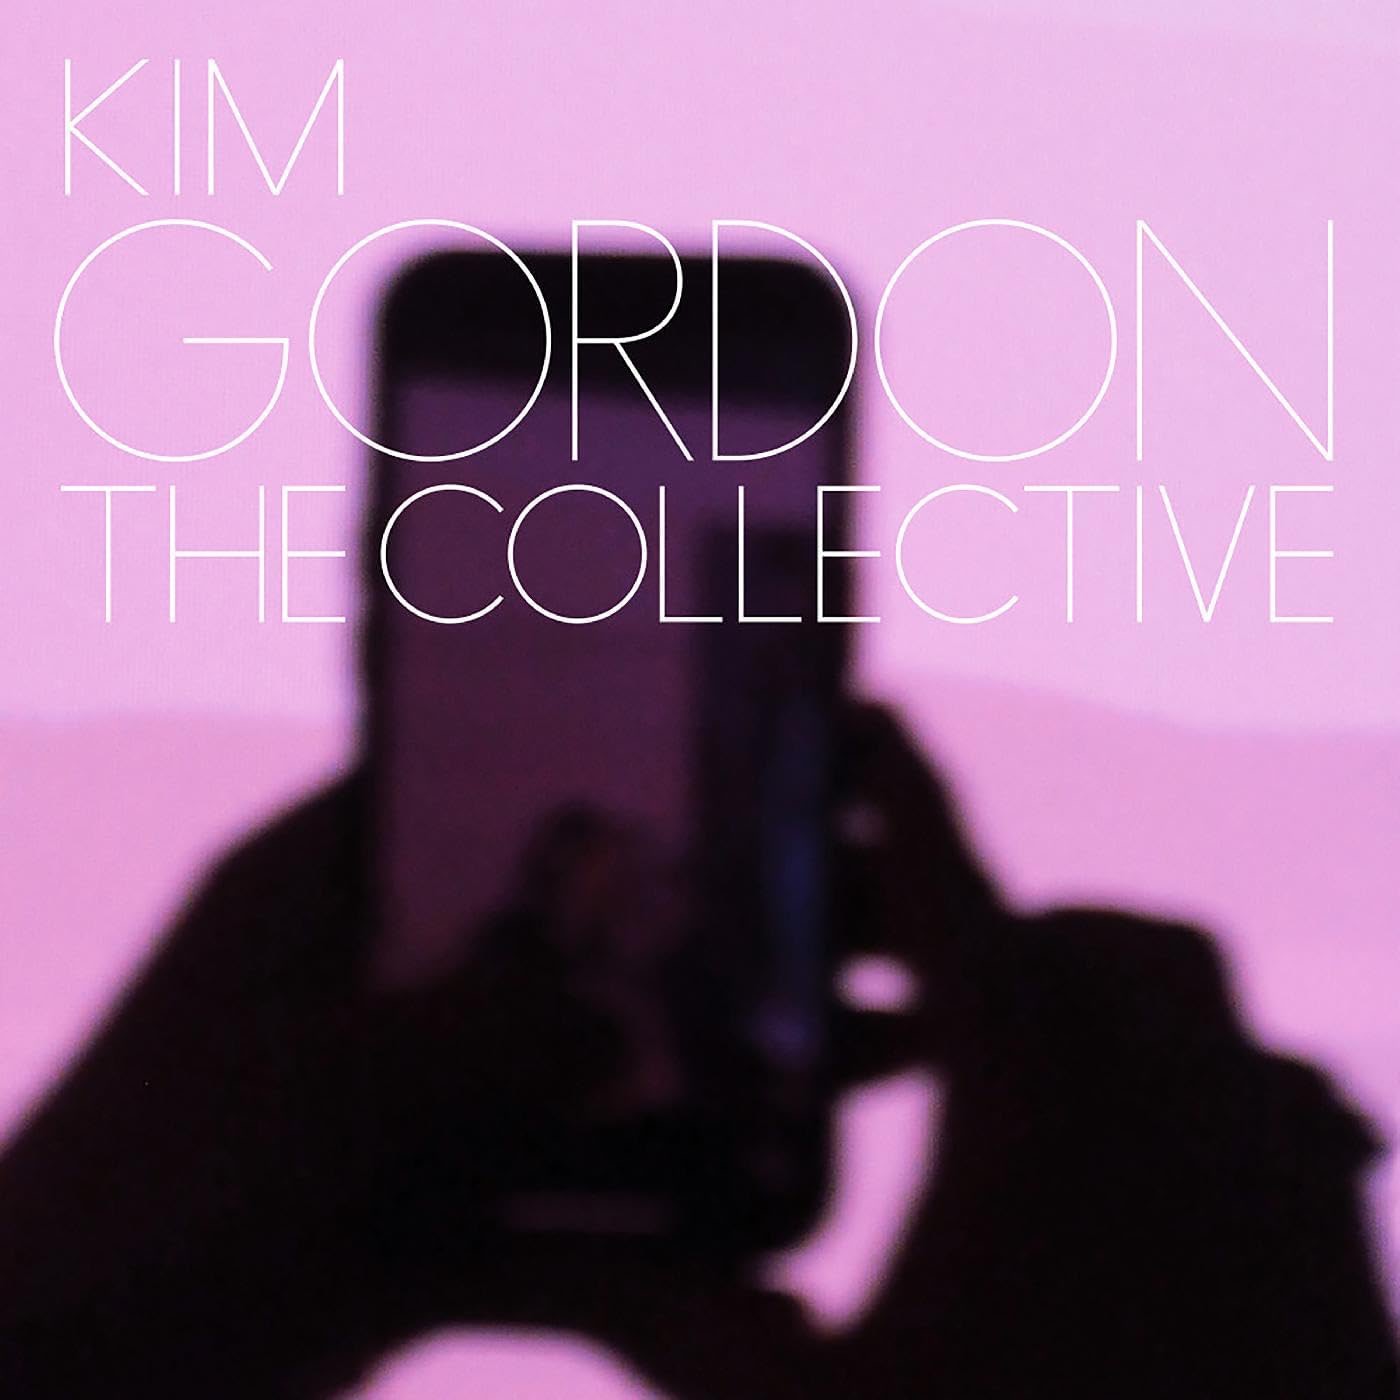 Kim Gordon – The Collective LP Review